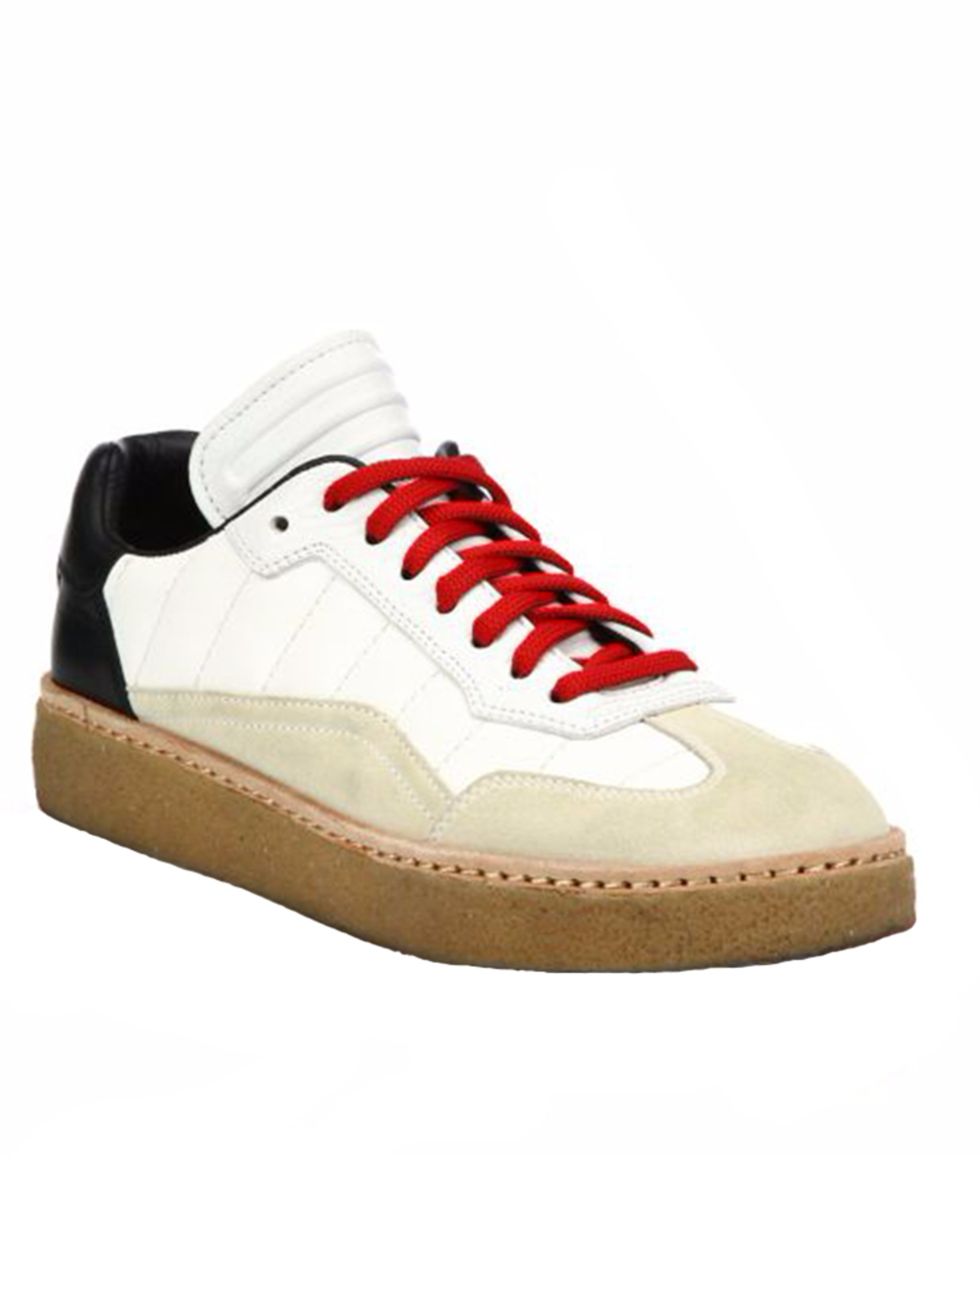 <p>Sneakers, £335, <a href="https://www.ssense.com/en-gb/women/product/alexander-wang/black-leather-suede-eden-sneakers/1462993?forced_user_country=GB&gclid=CK-kxbnDp8sCFckaGwod-JMMDg" target="_blank">Alexander Wang</a></p>